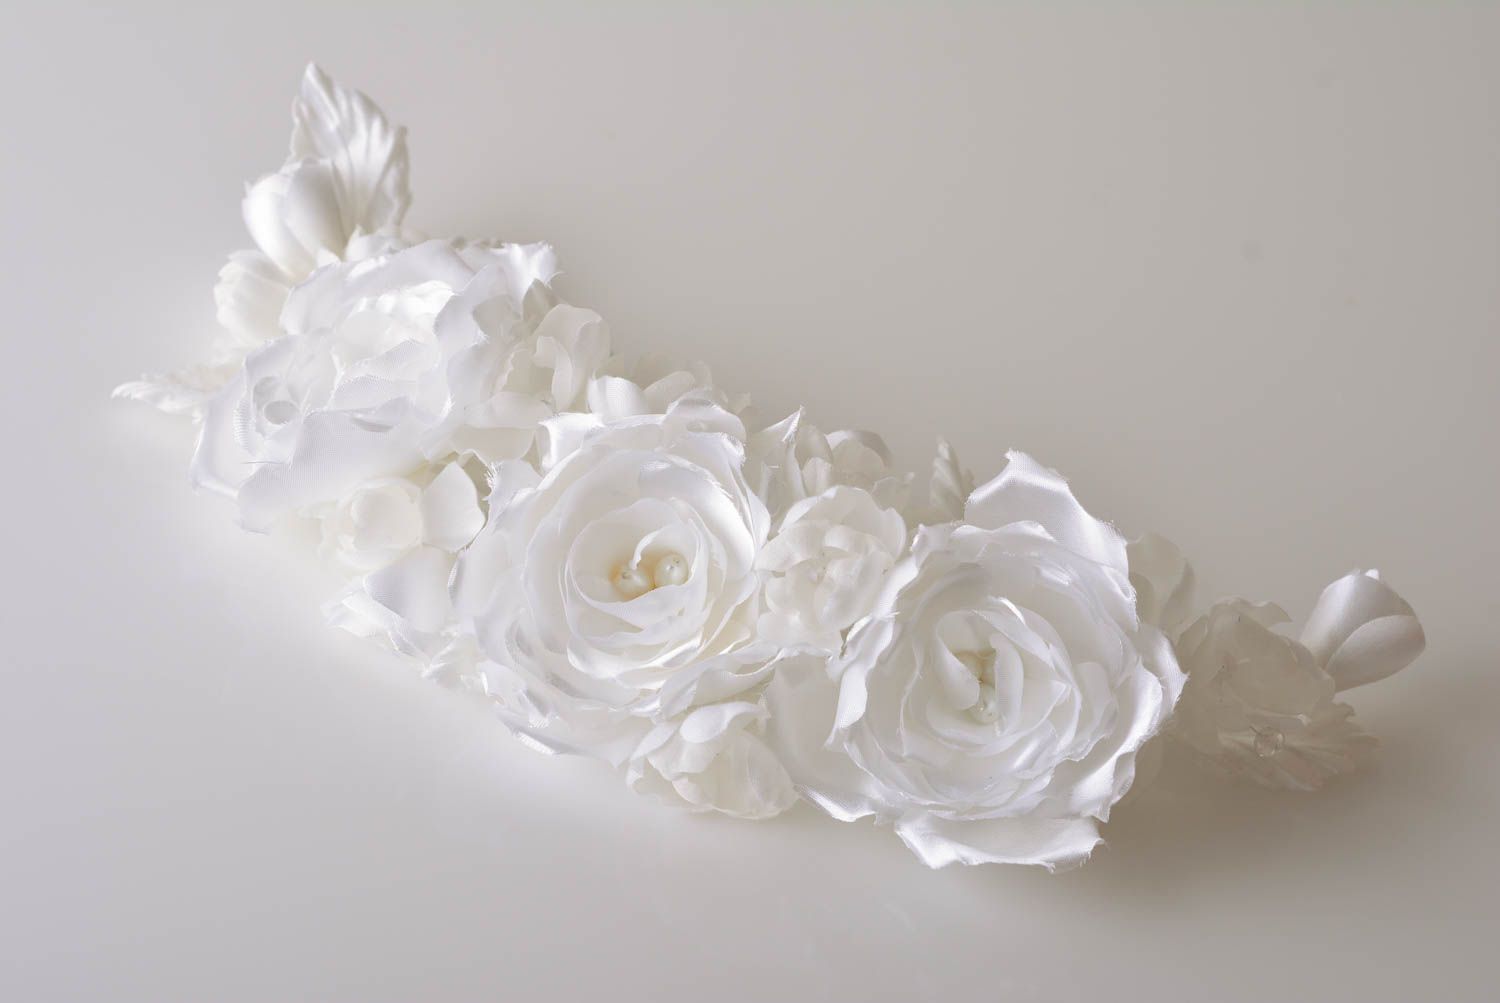 Fleurs décoratives en tissu faites main design original cadeau Roses blanches photo 1